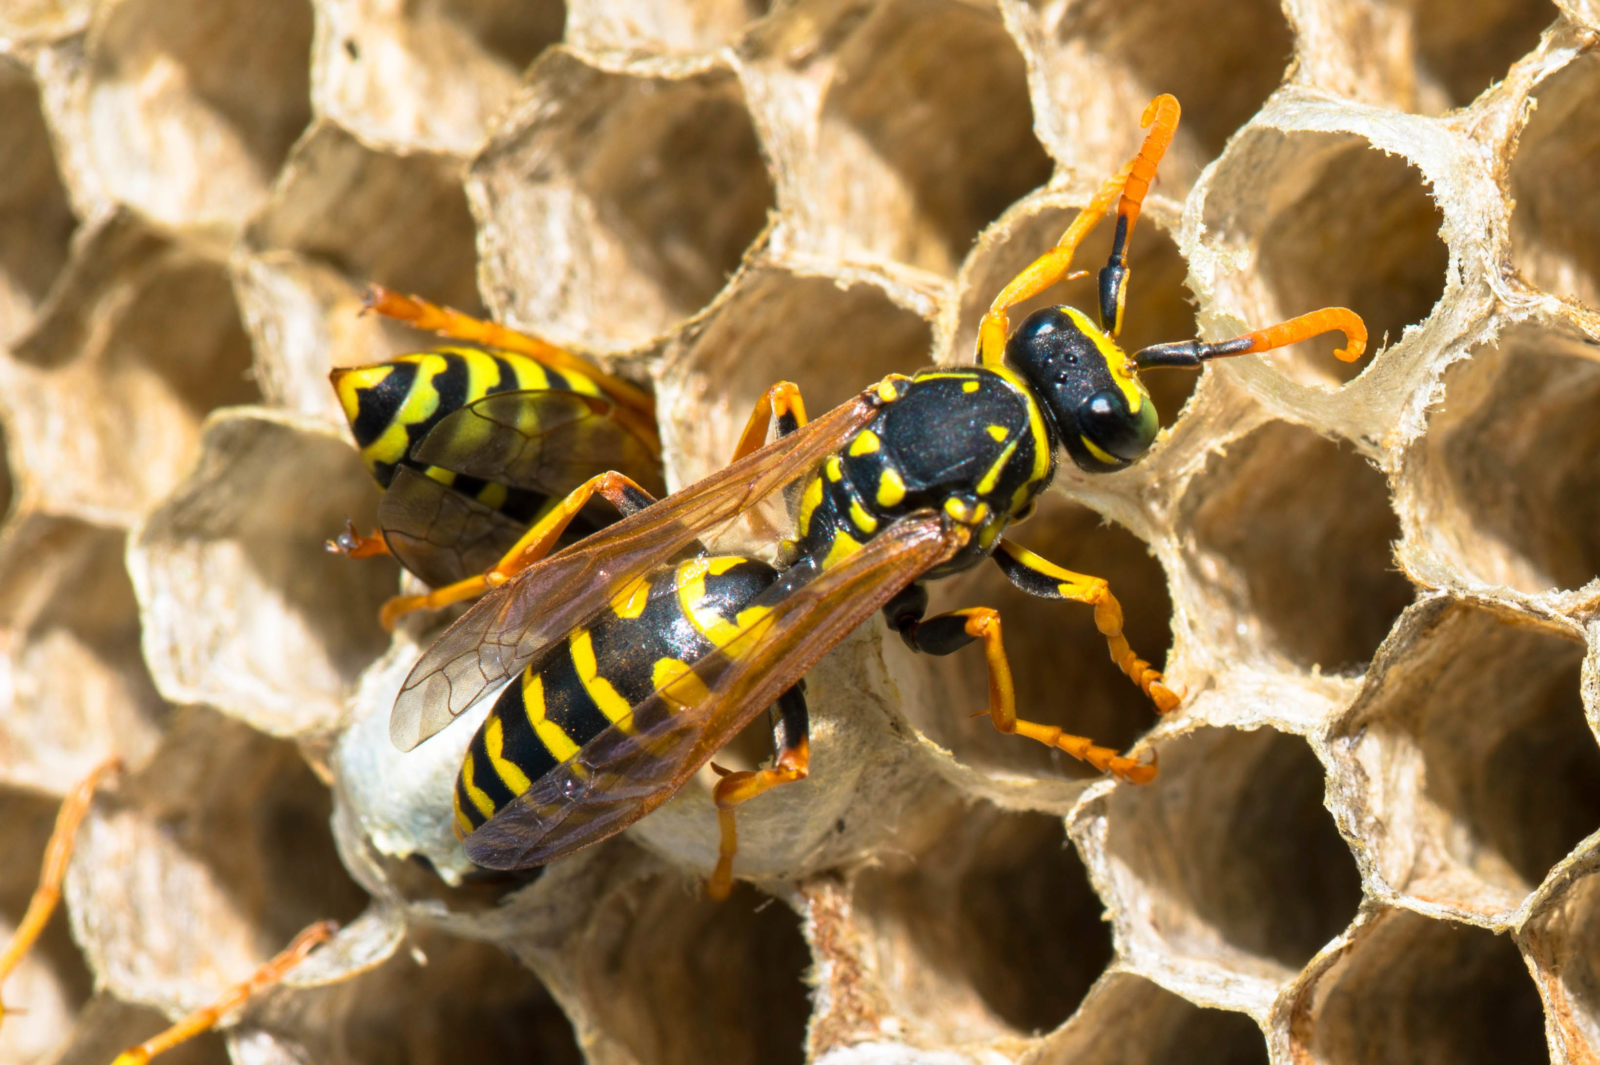 Wasps control